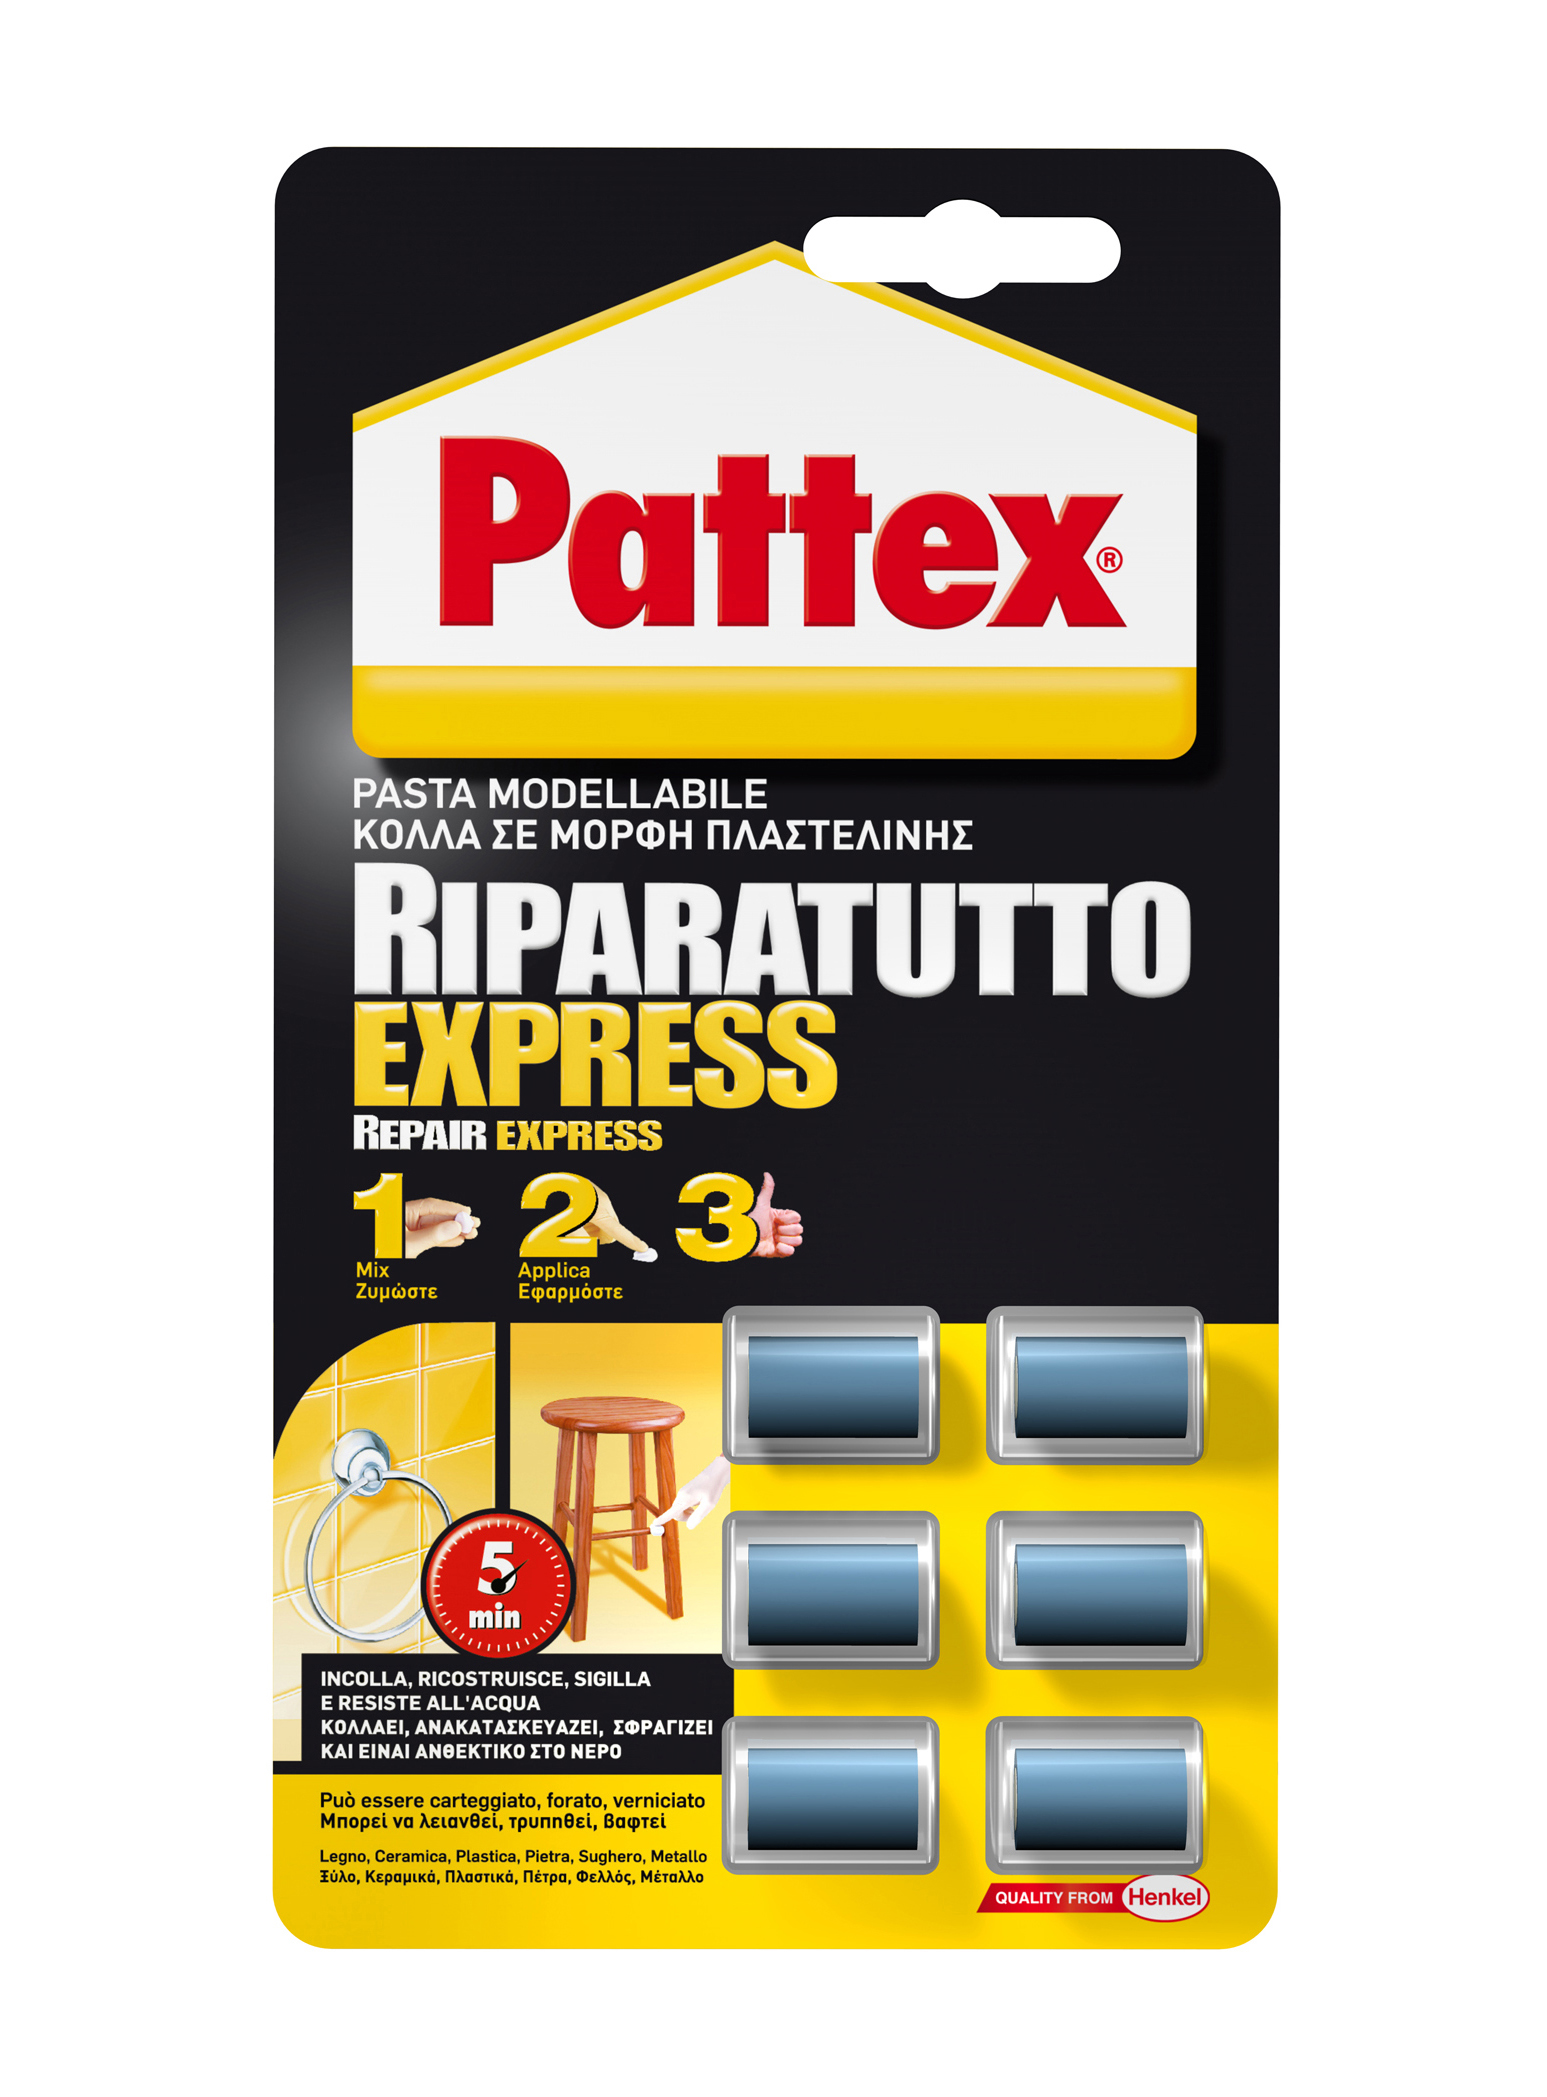 Pattex riparatutto express monodose 6x5g